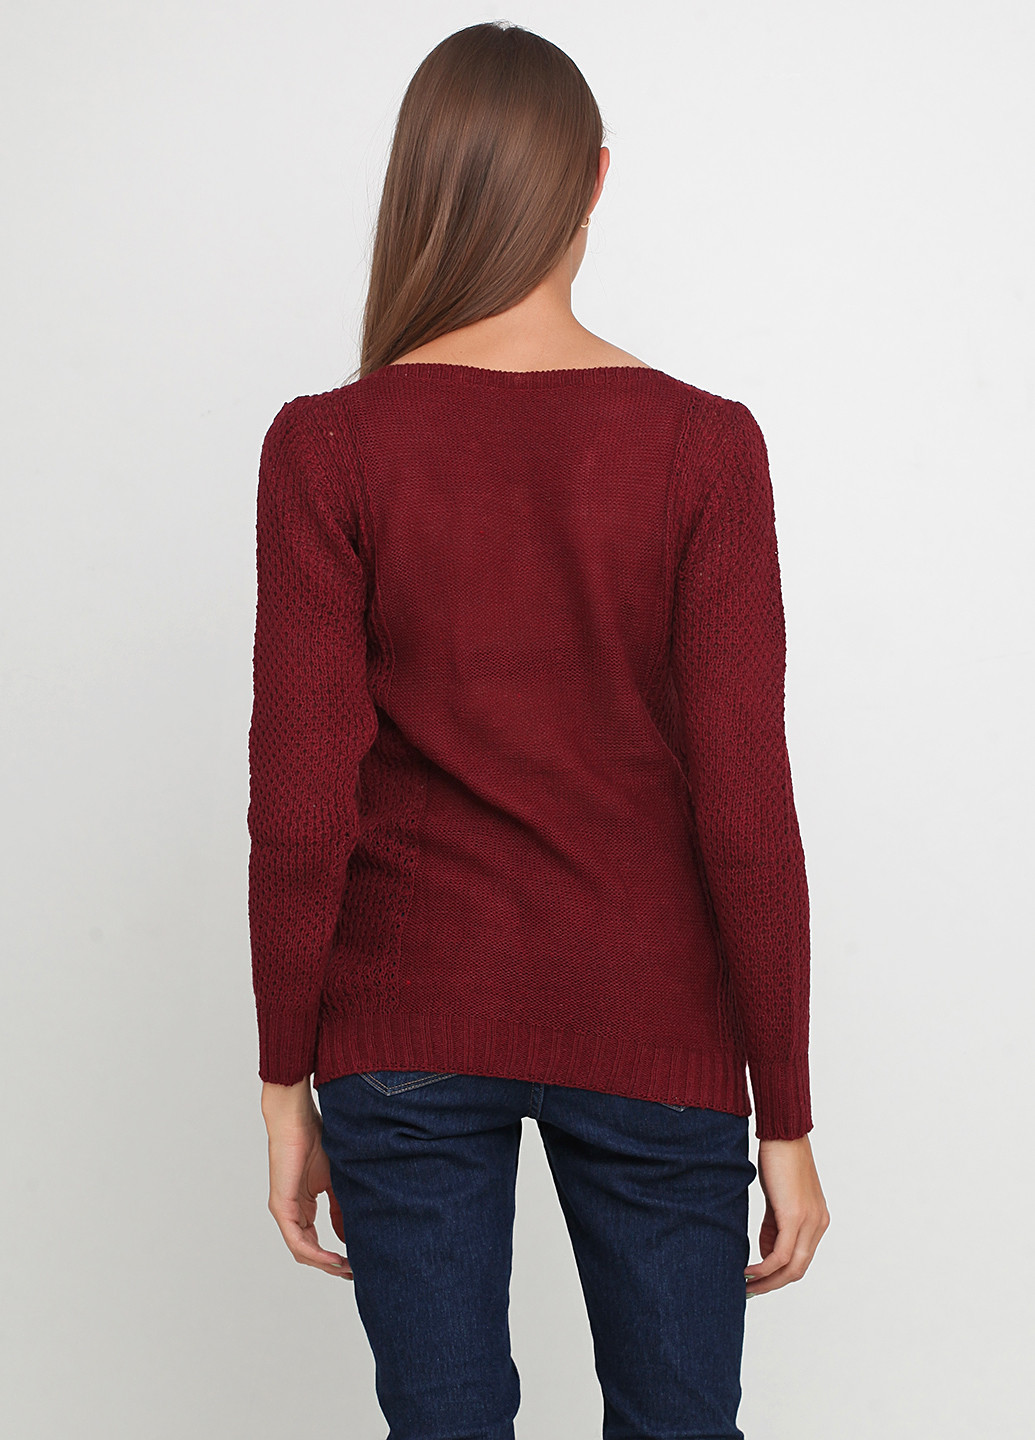 Бордовый демисезонный пуловер пуловер Massimo